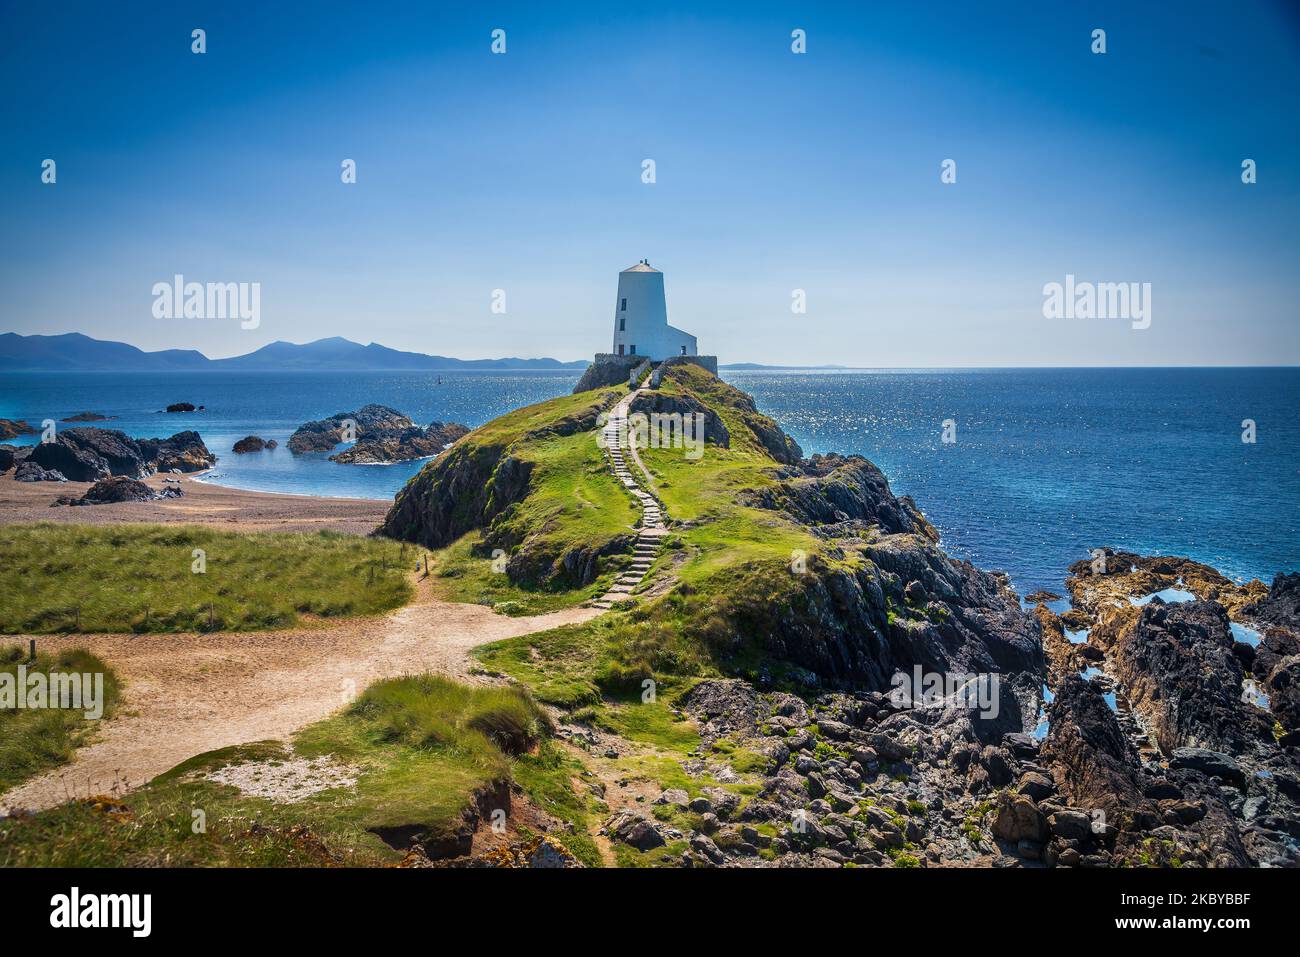 Llanddwyn Island (Ynys Llanddwyn). Anglesey North Wales. Tŵr Mawr lighthouse was modelled on the windmills of Anglesey, was built in 1845. Stock Photo